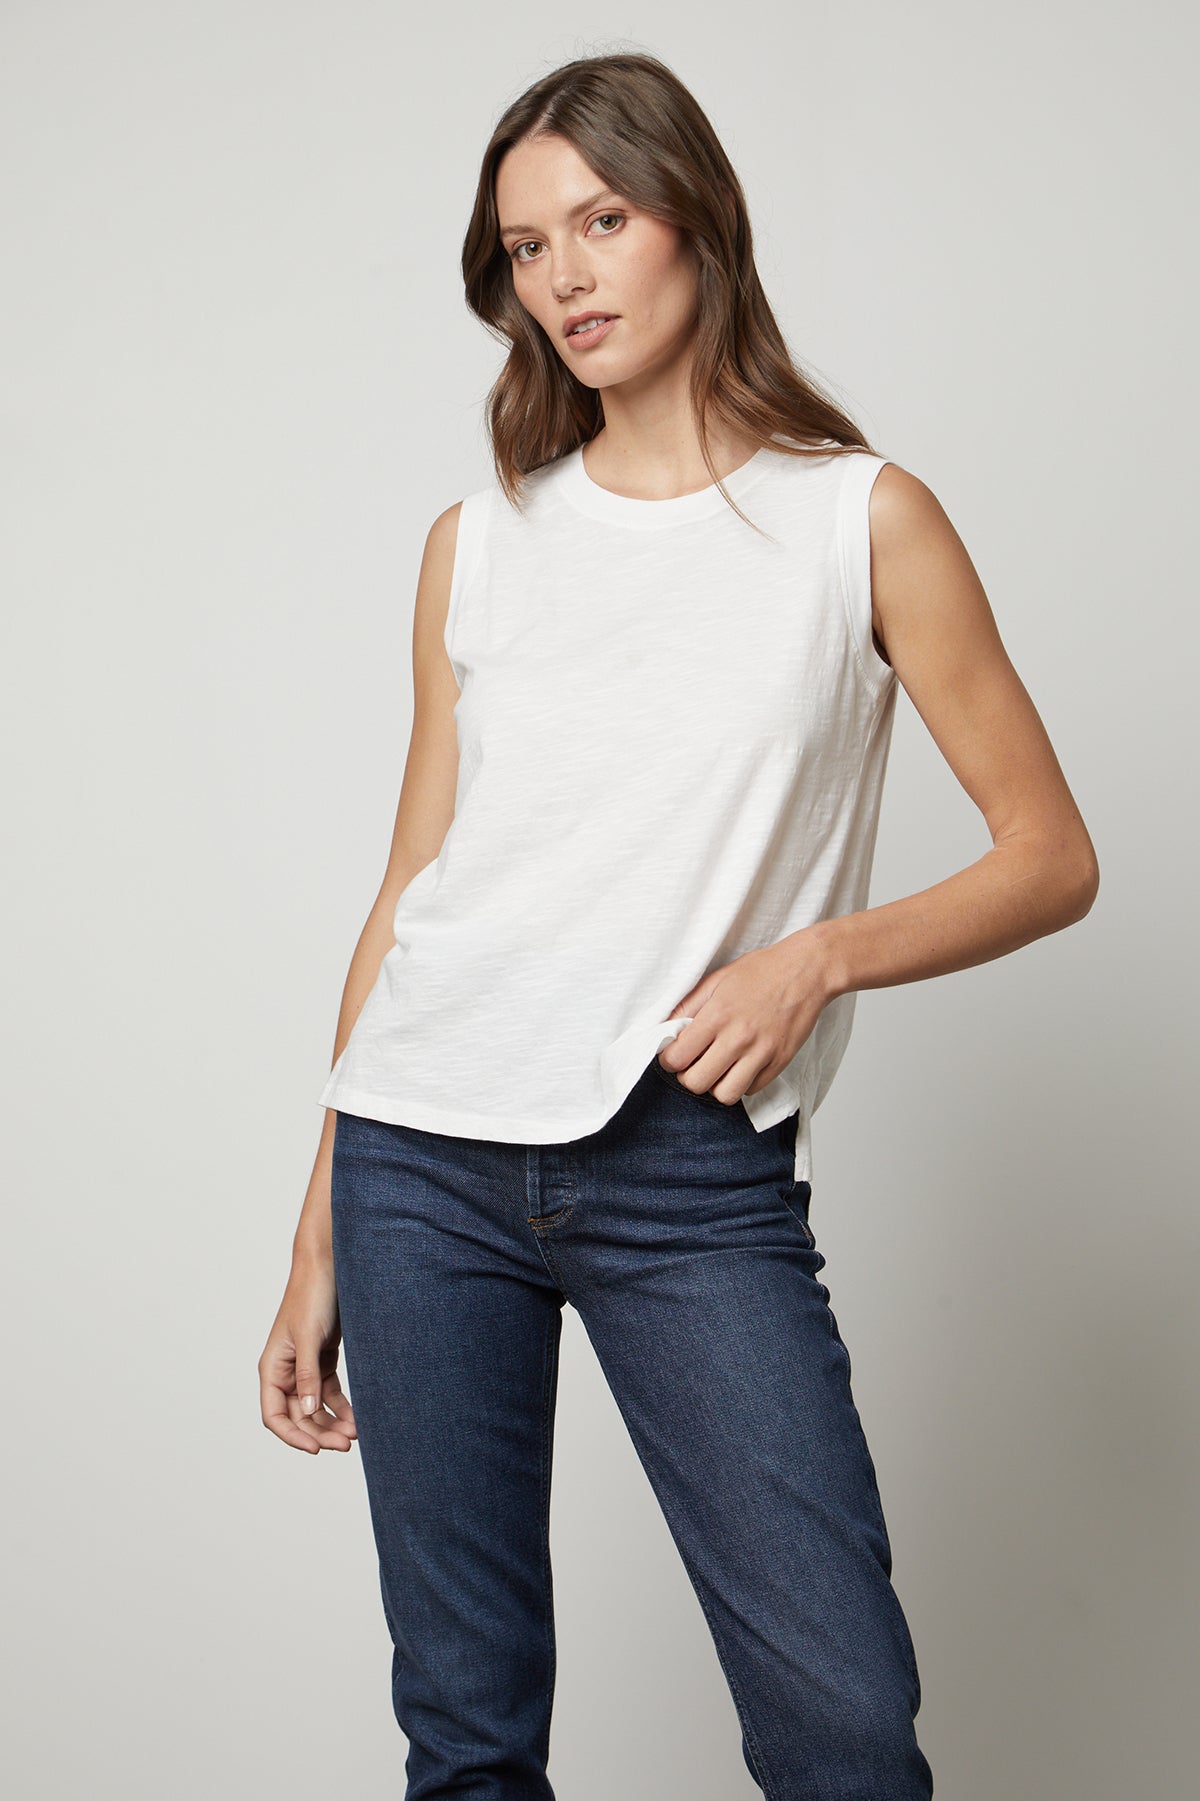   The model is wearing a Velvet by Graham & Spencer ELLEN VINTAGE SLUB TANK TOP and jeans. 